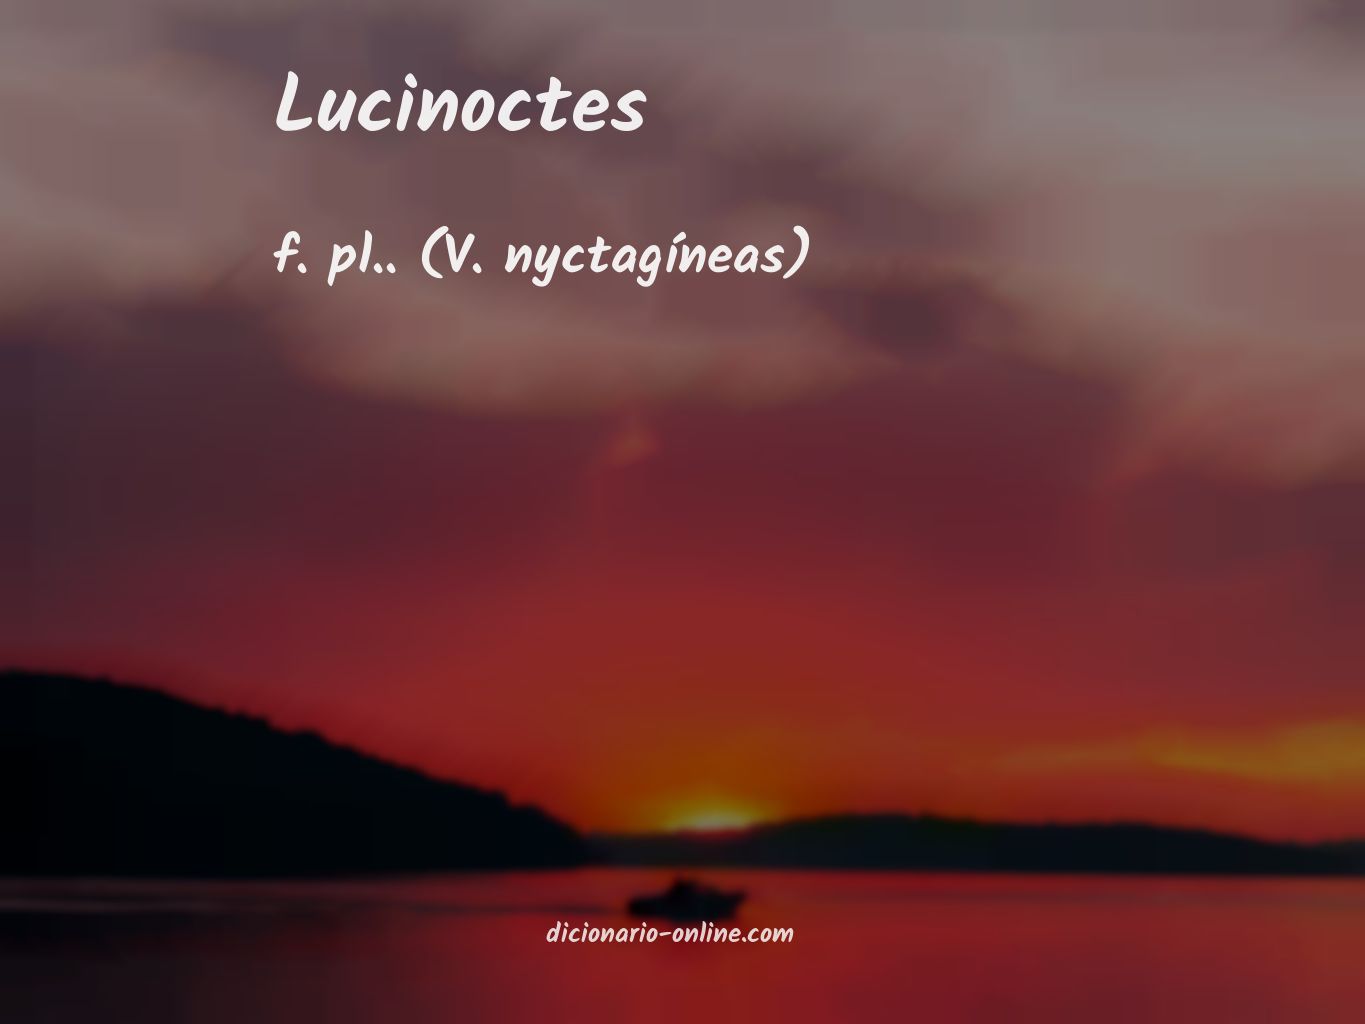 Significado de lucinoctes